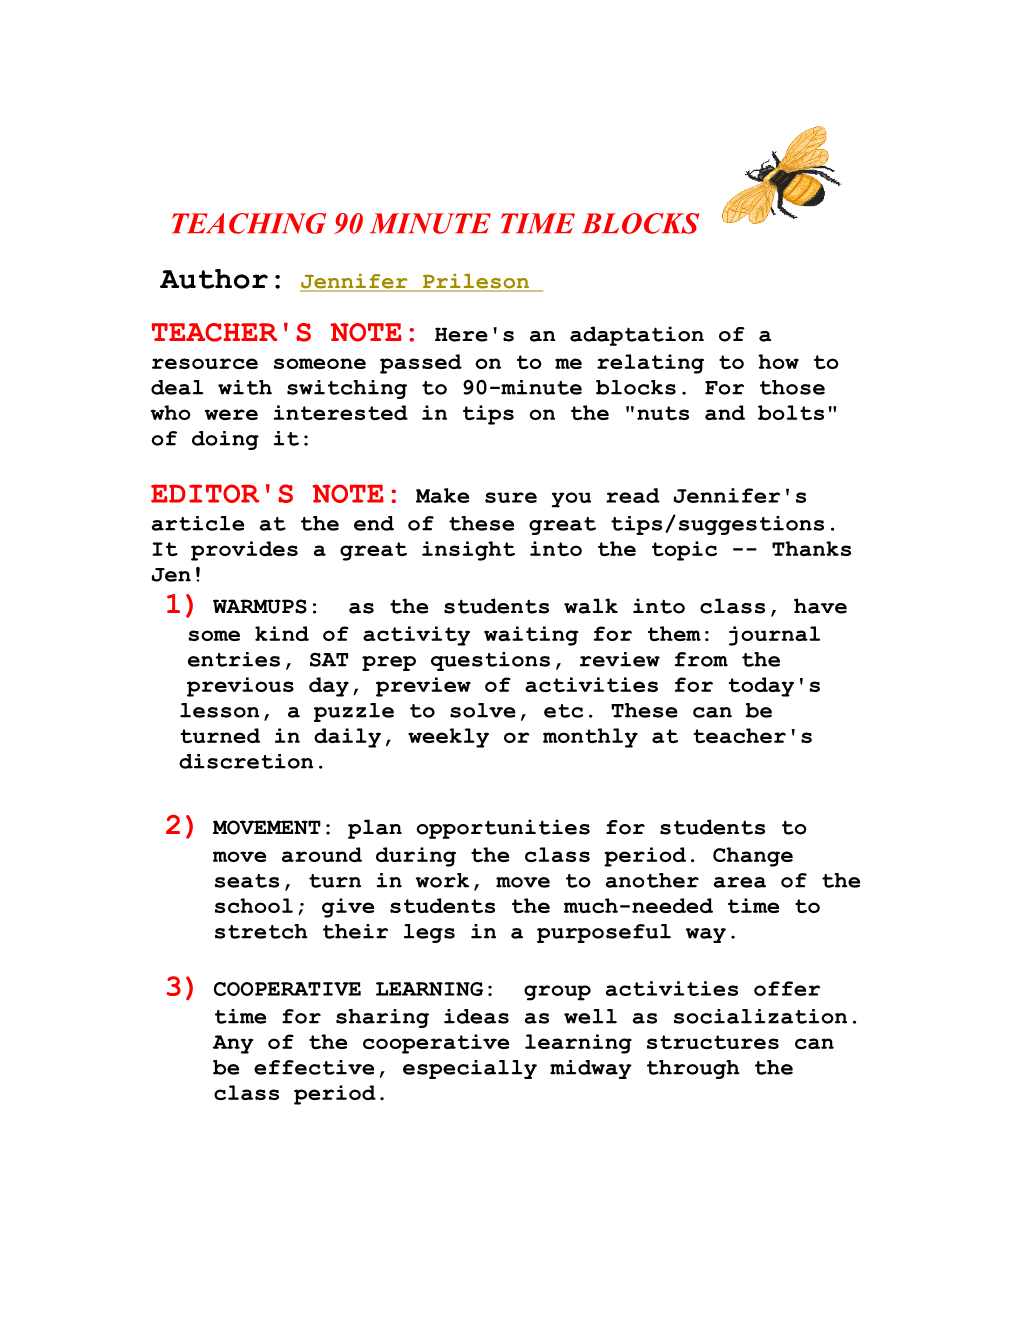 Teaching 90 Minute Time Blocks